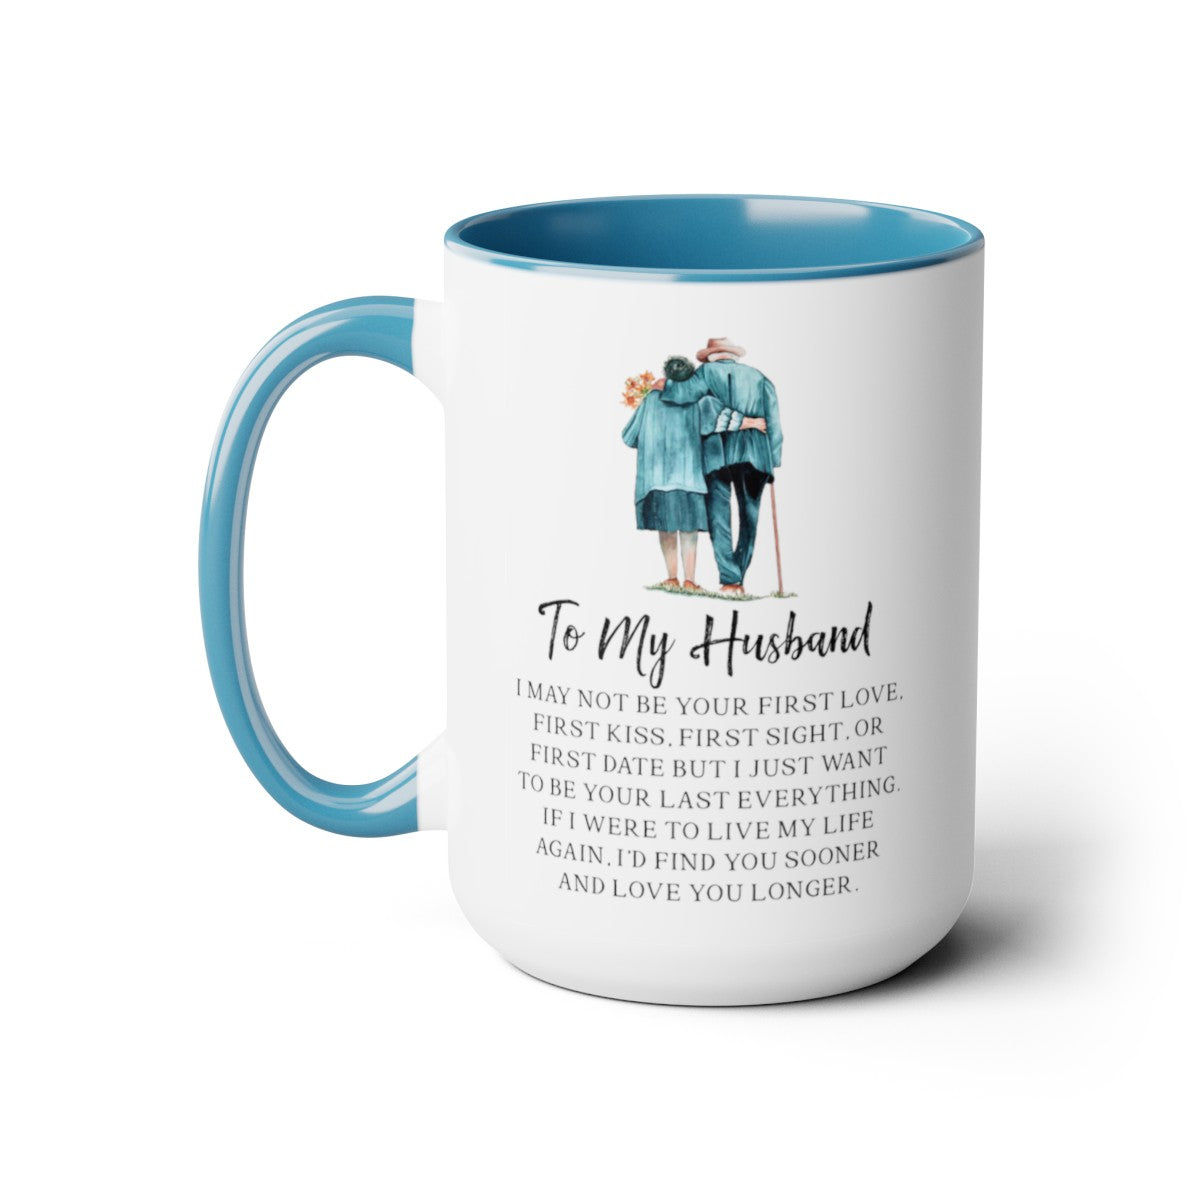 To My Husband - Last Everything - Two-Tone Coffee Mugs, 15oz